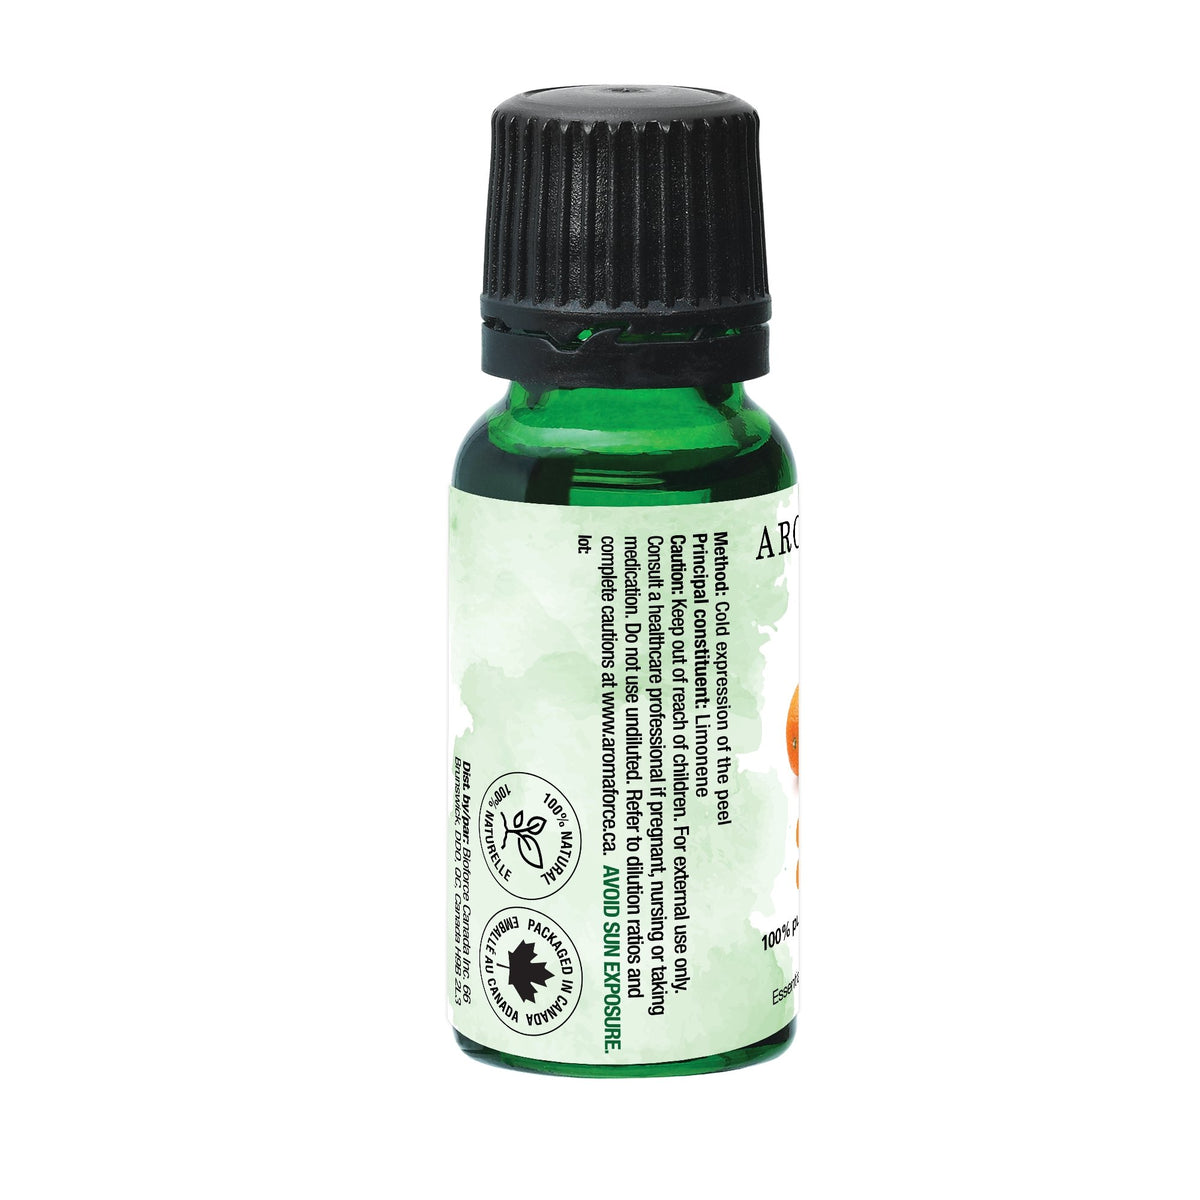 Aromaforce Orange Essential Oil 30mL - A.Vogel Canada